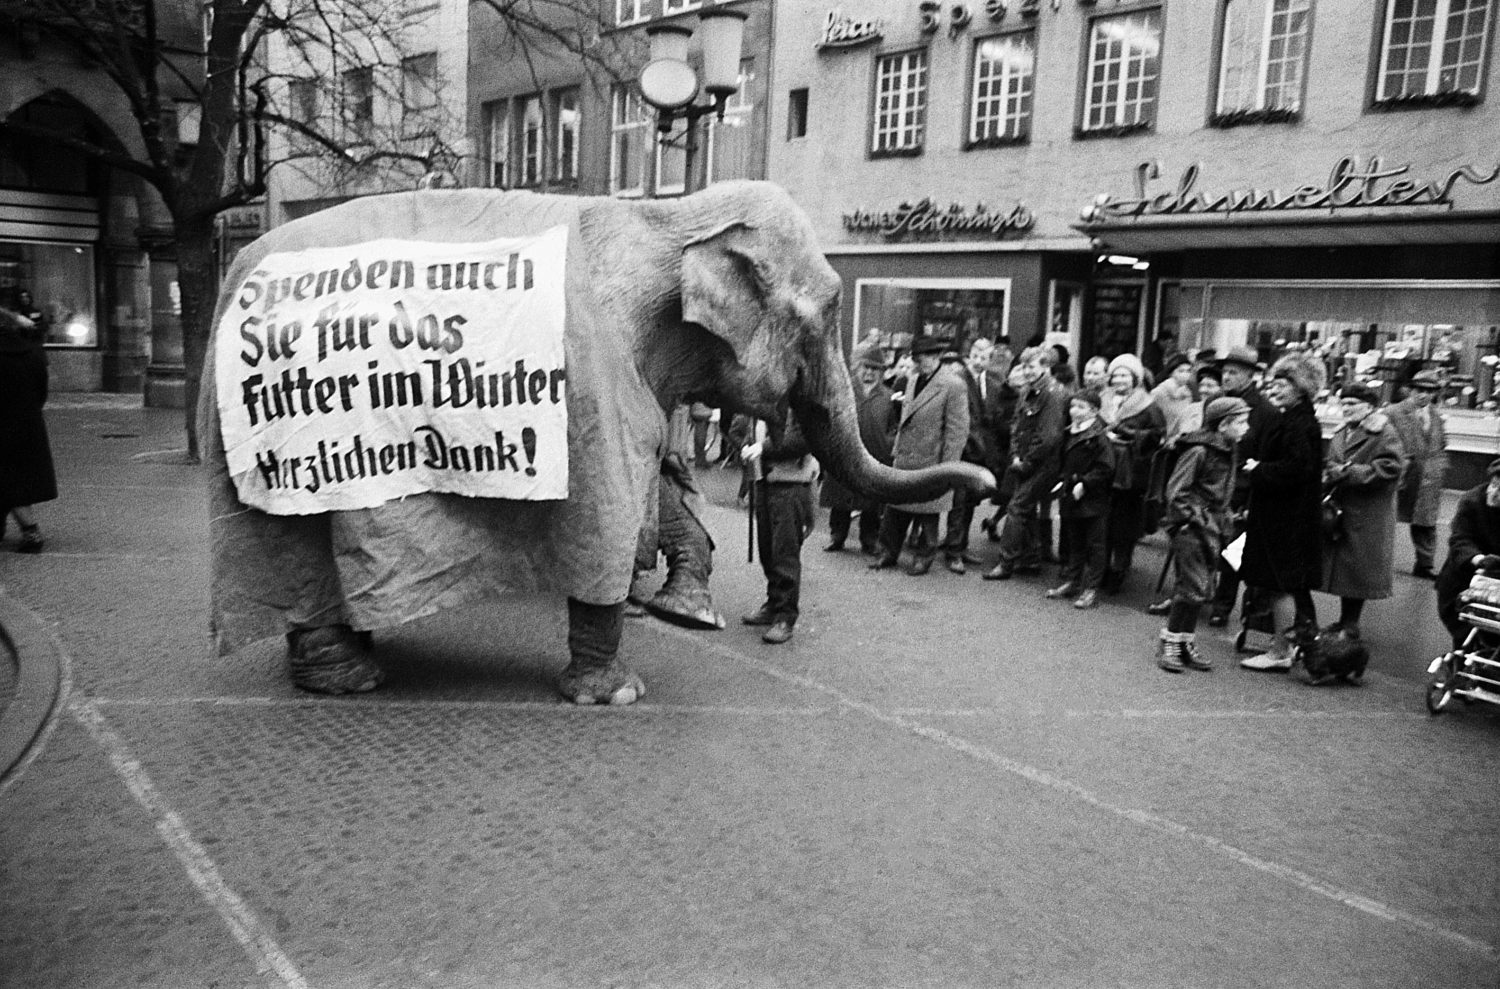 Zirkus-Elefant in Münster in der Innenstadt. Foto: Stadtmuseum Münster, Sammlung Hänscheid.